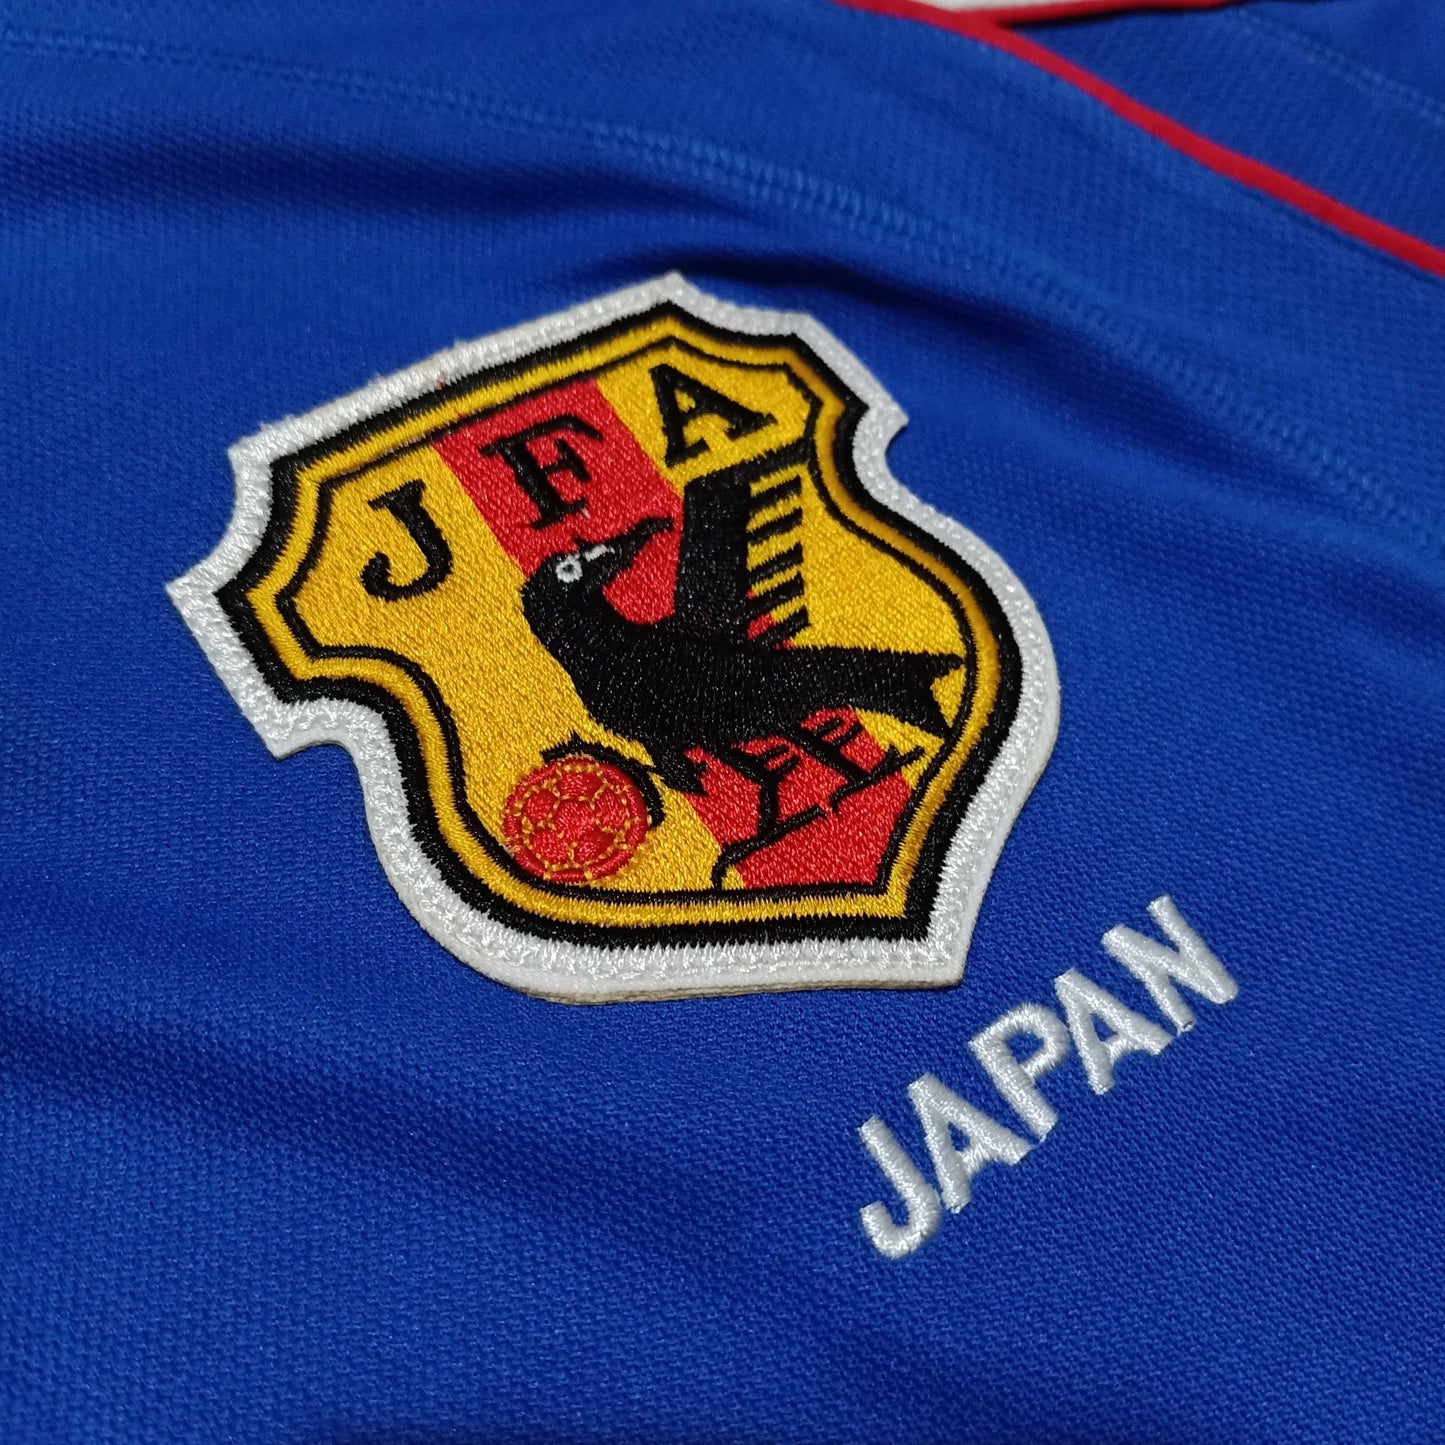 2000/01 Japan Home Shirt - ClassicFootballJersey